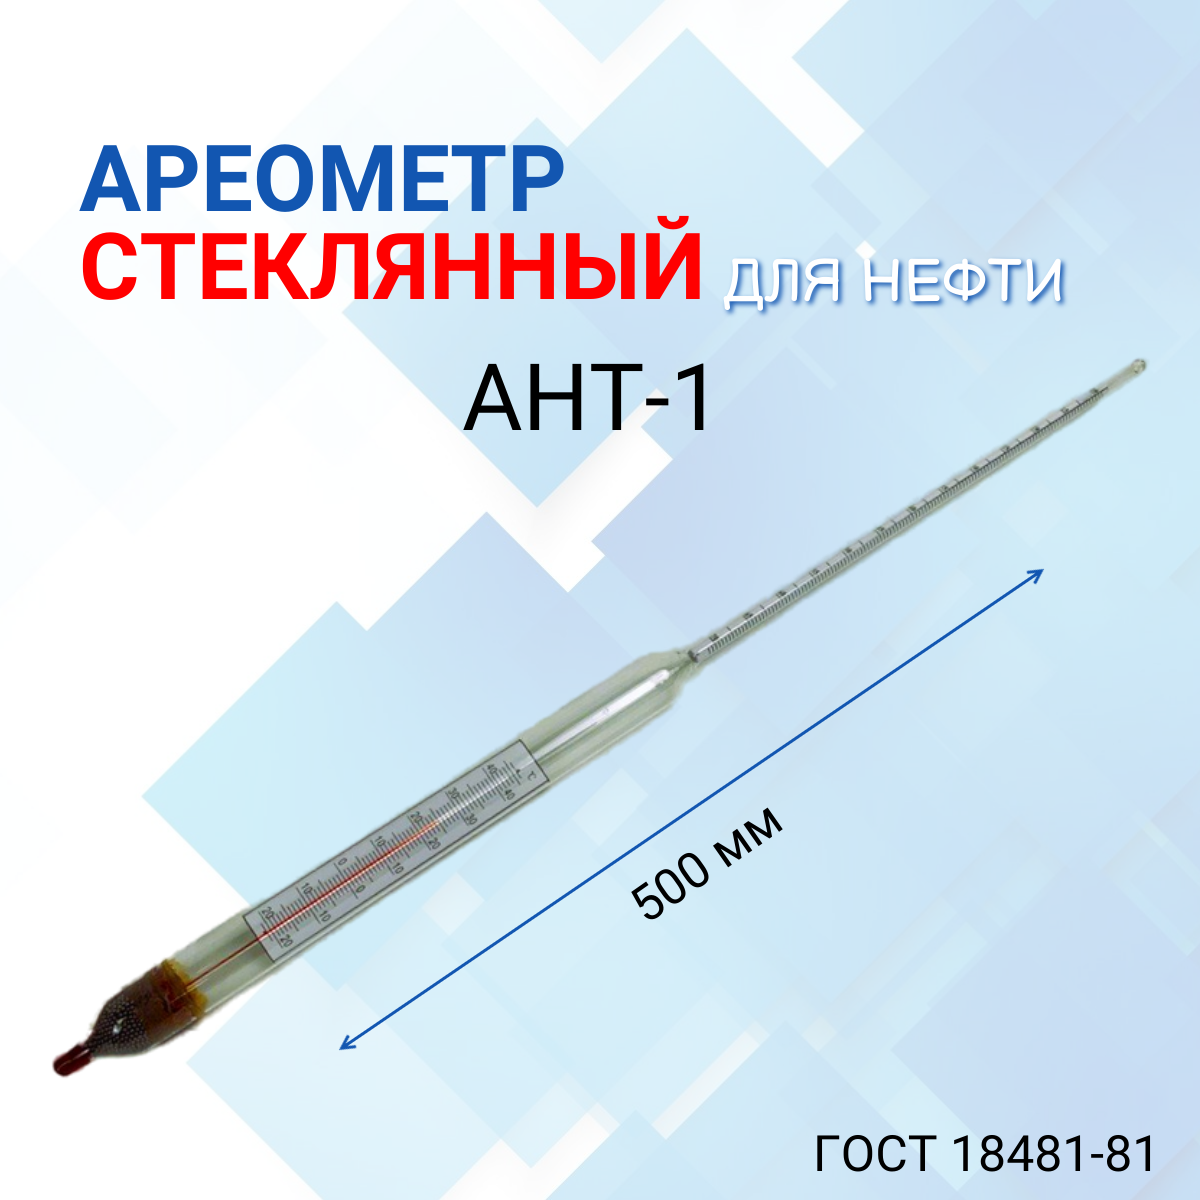 Ареометр "АНТ-1" 770-830 с поверкой РФ